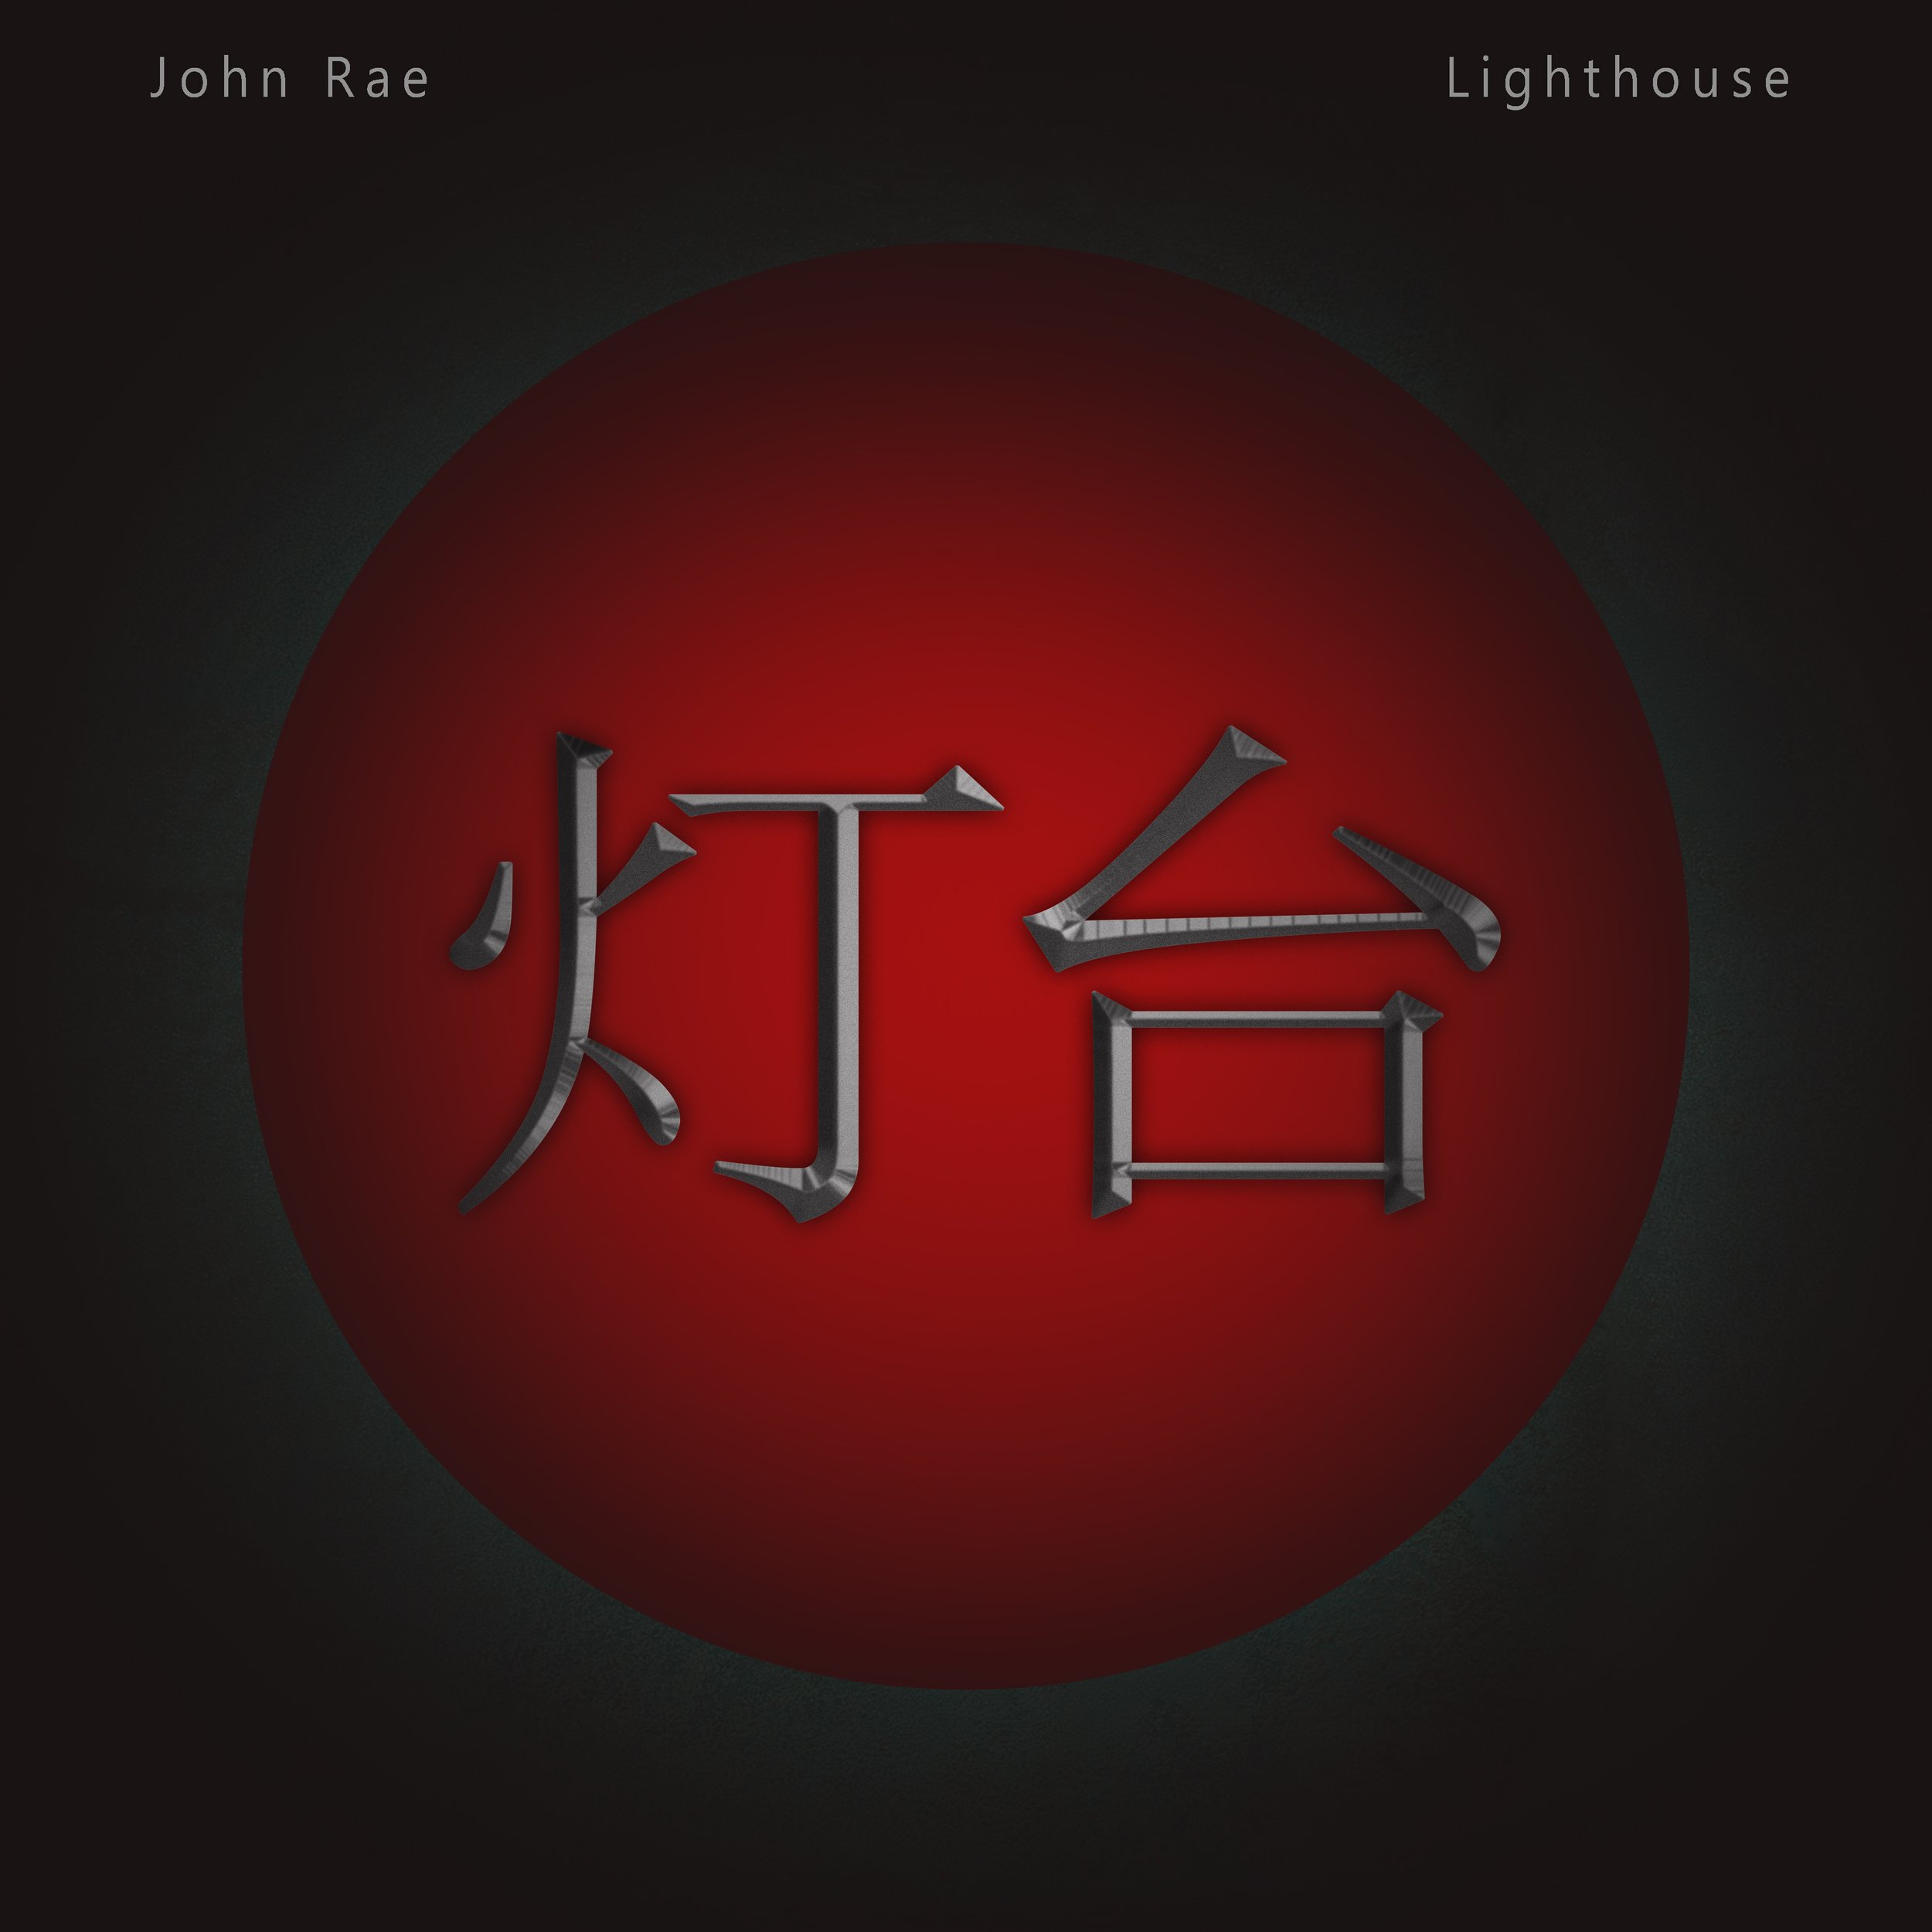 JOHN RAE Lighthouse design rileyclaxton.com.jpg